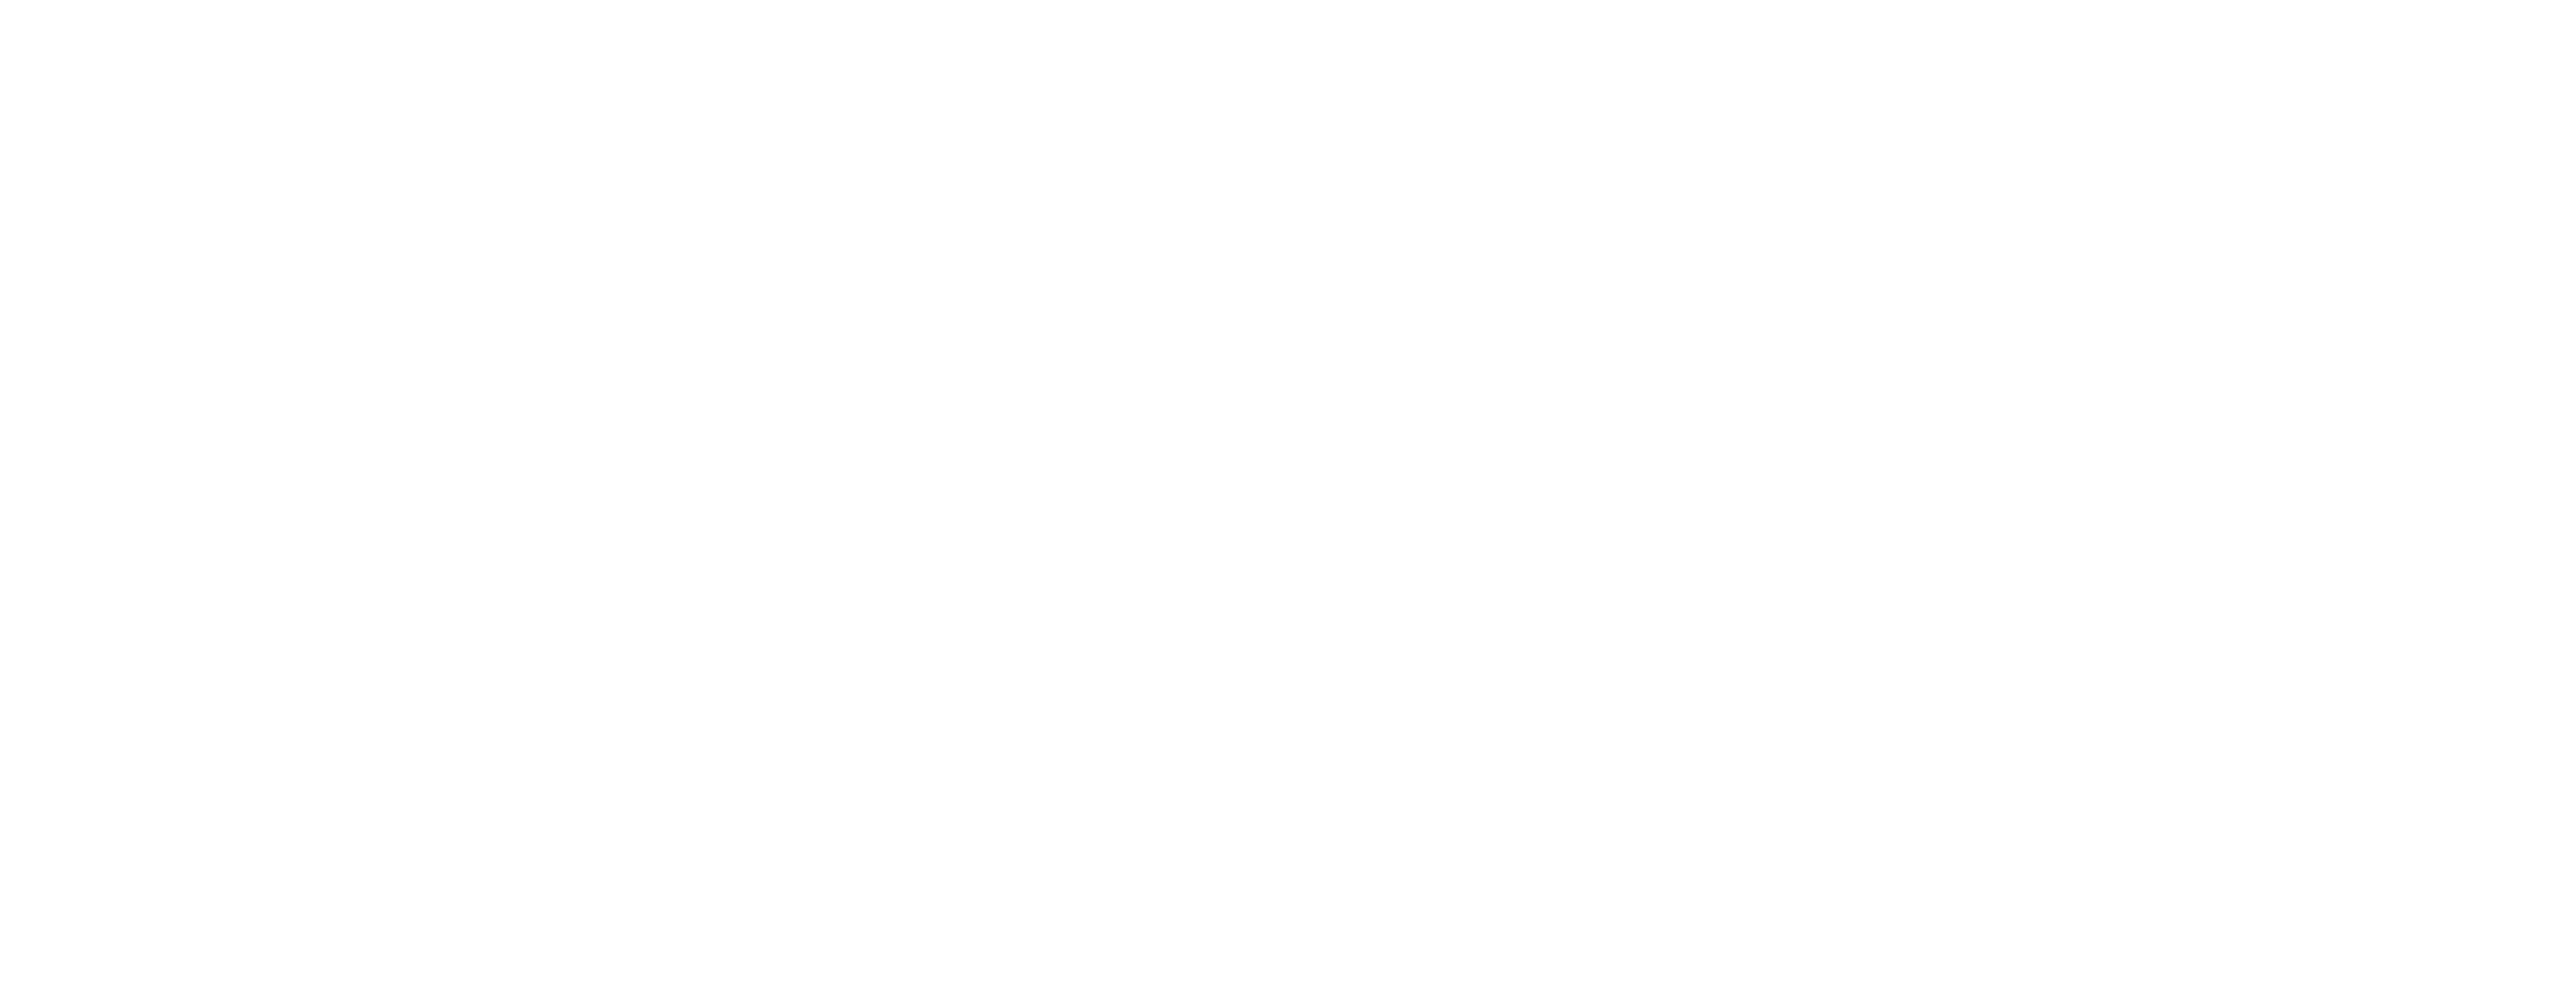 San Francisco Planning Department logo